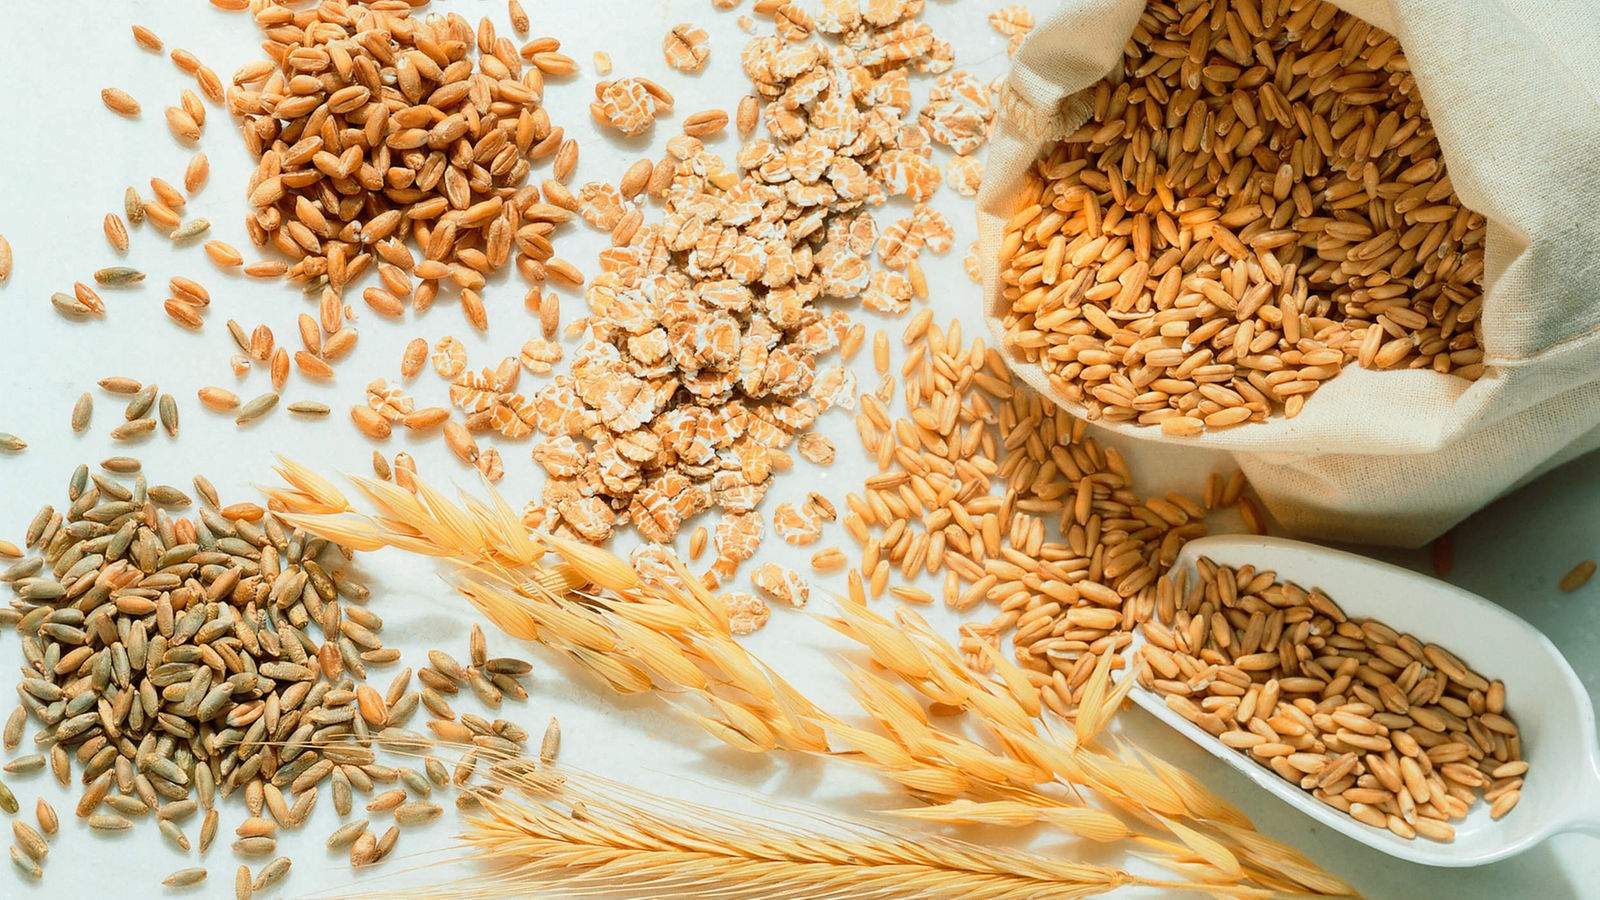 Getreide: Warenkunde - Lebensmittel - Gesellschaft - Planet Wissen